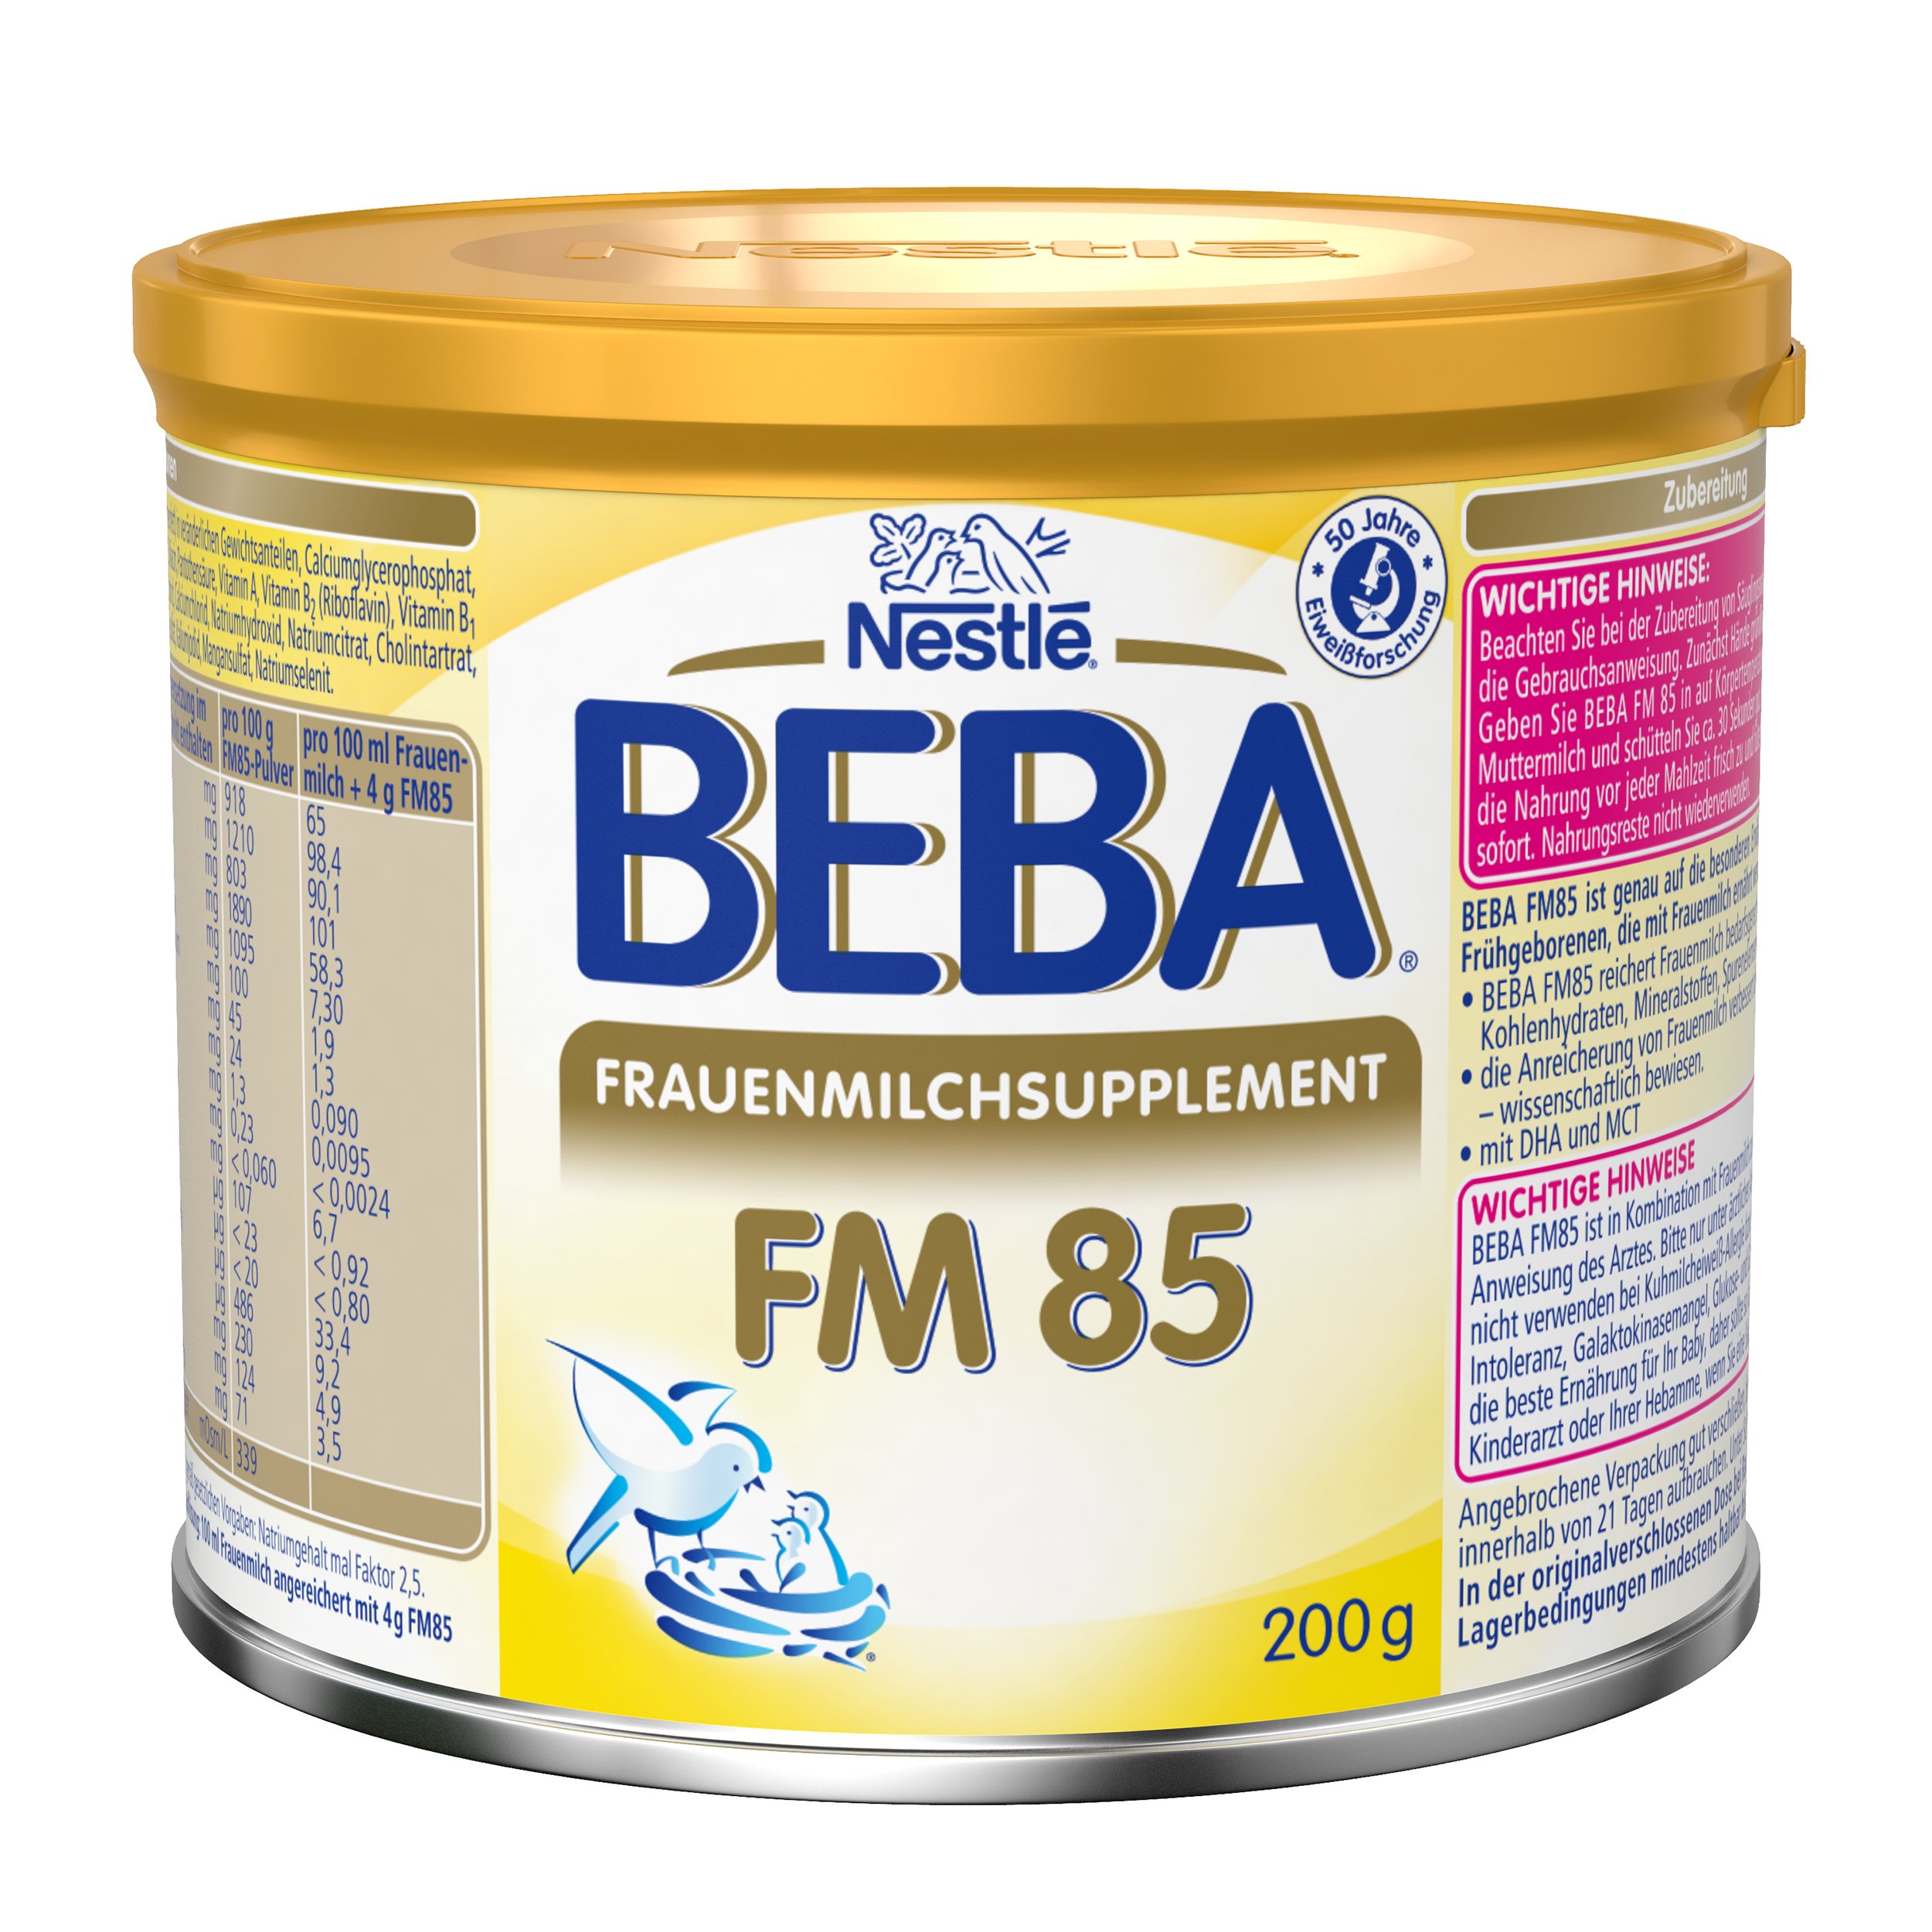 Nestlé Beba FM 85, 1er Pack (1 x 200 g)